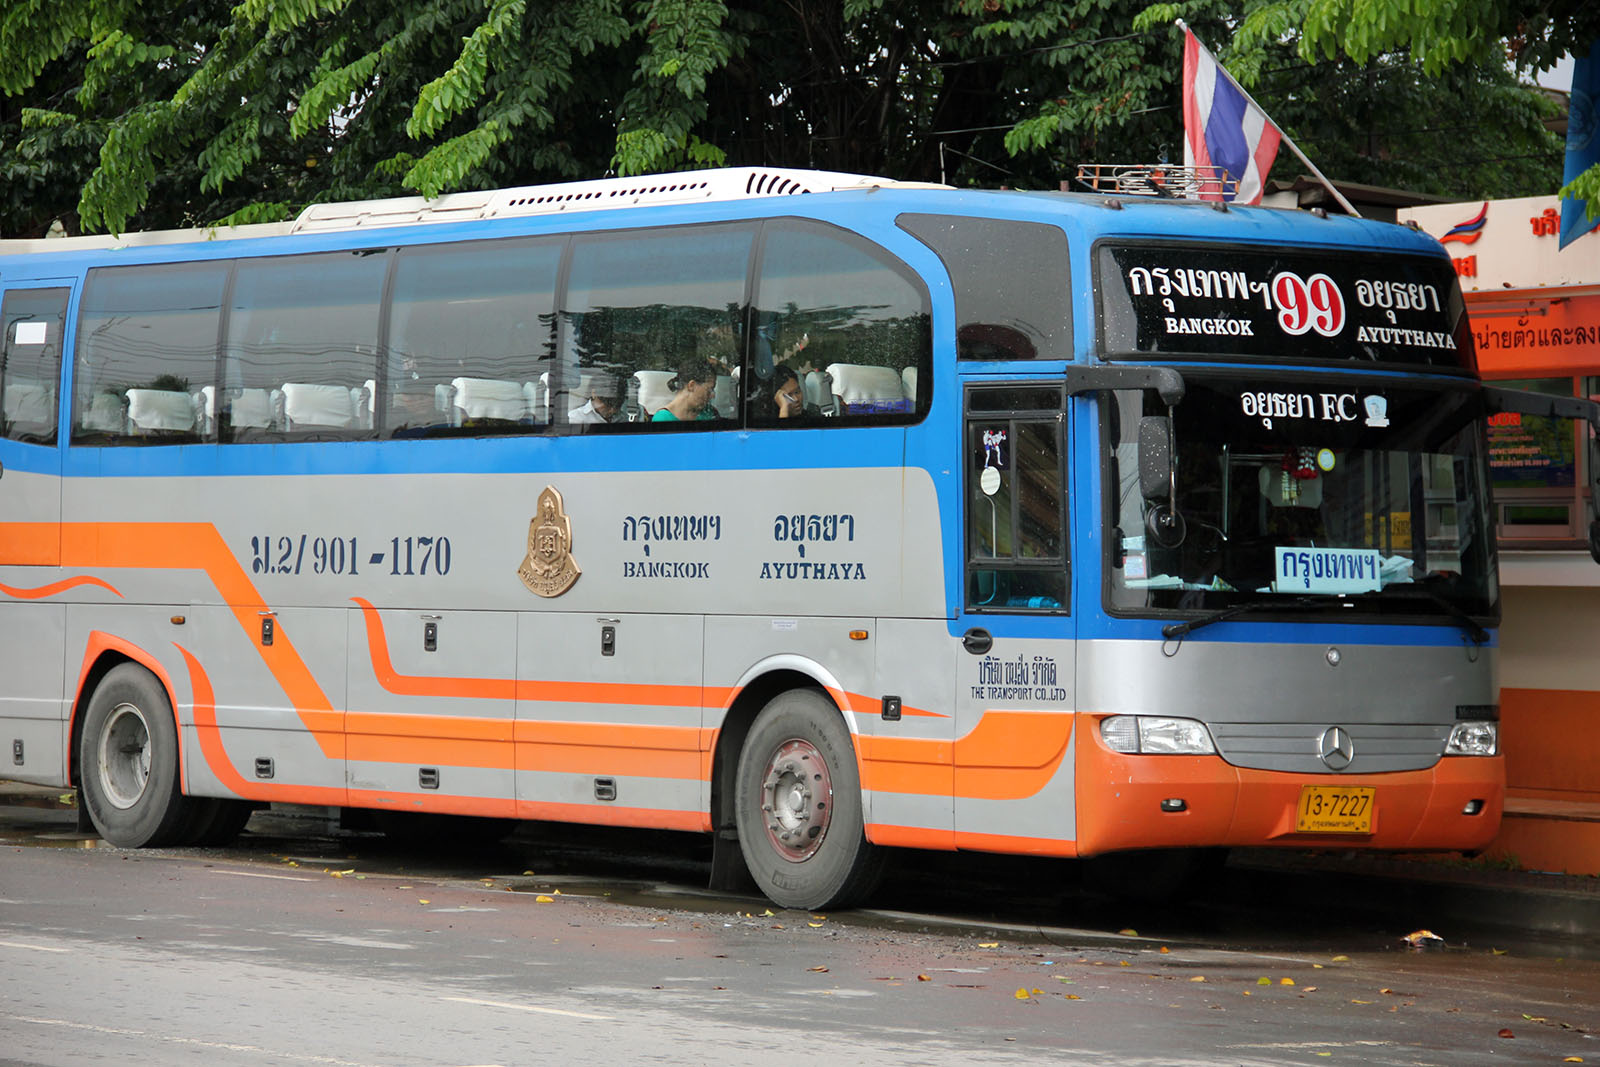 http://3.bp.blogspot.com/-nCGdpxADP6E/UOnMFSUmtLI/AAAAAAAAJVo/xv2-Jak6z3o/s1600/Bus-Bangkok-Ayutthaya.JPG